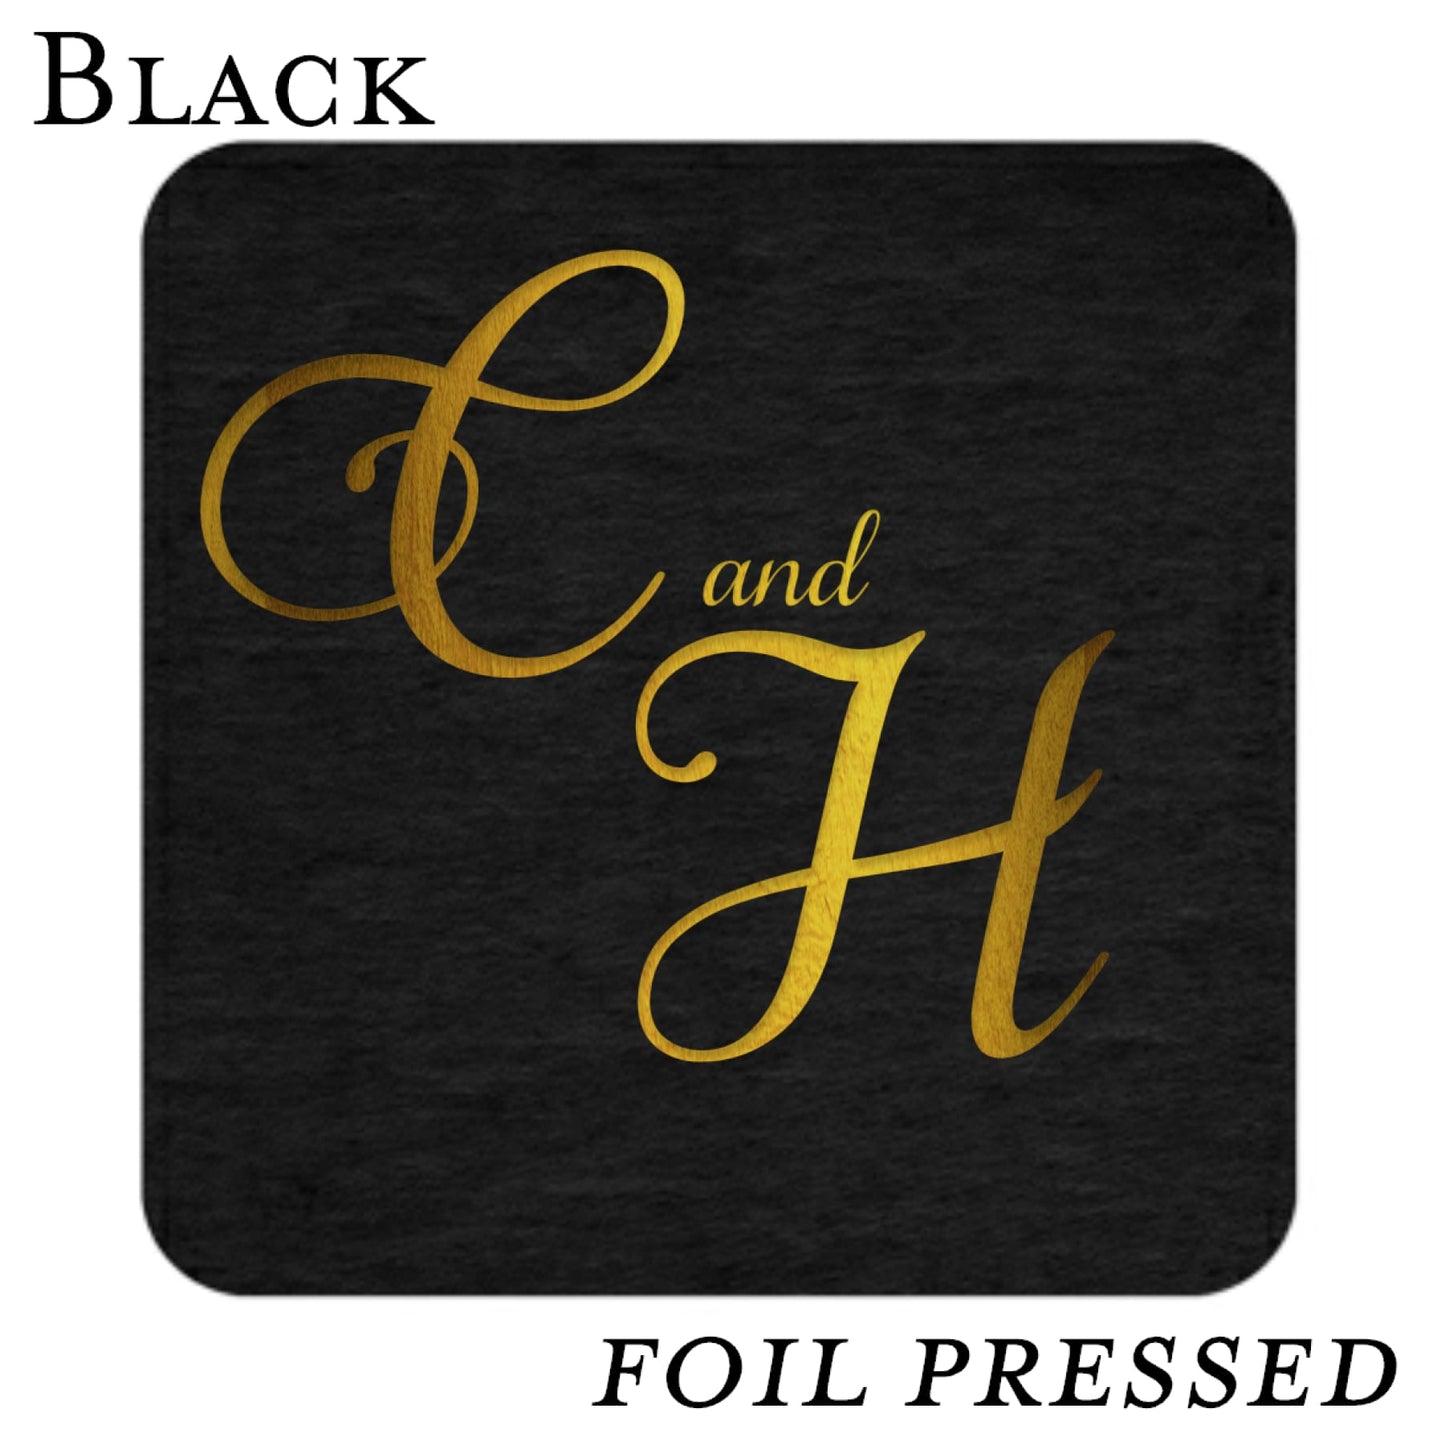 Black Wedding Reception Coasters-Foil Pressed - All That Glitters Invitations